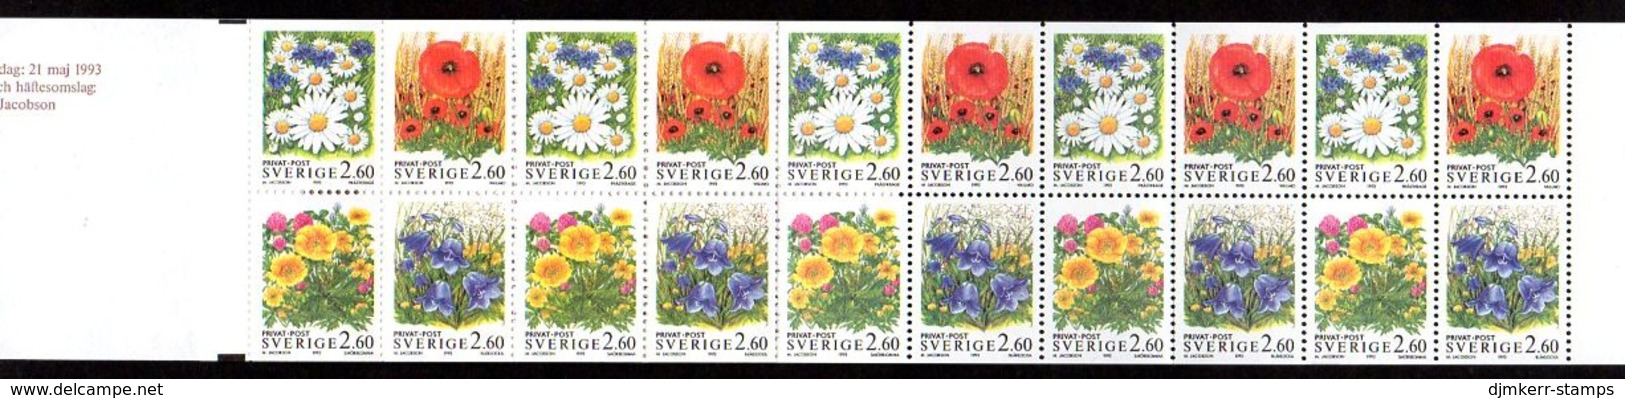 SWEDEN 1993 Summer Flowers Booklet MNH / **,  Michel MH183 - 1981-..